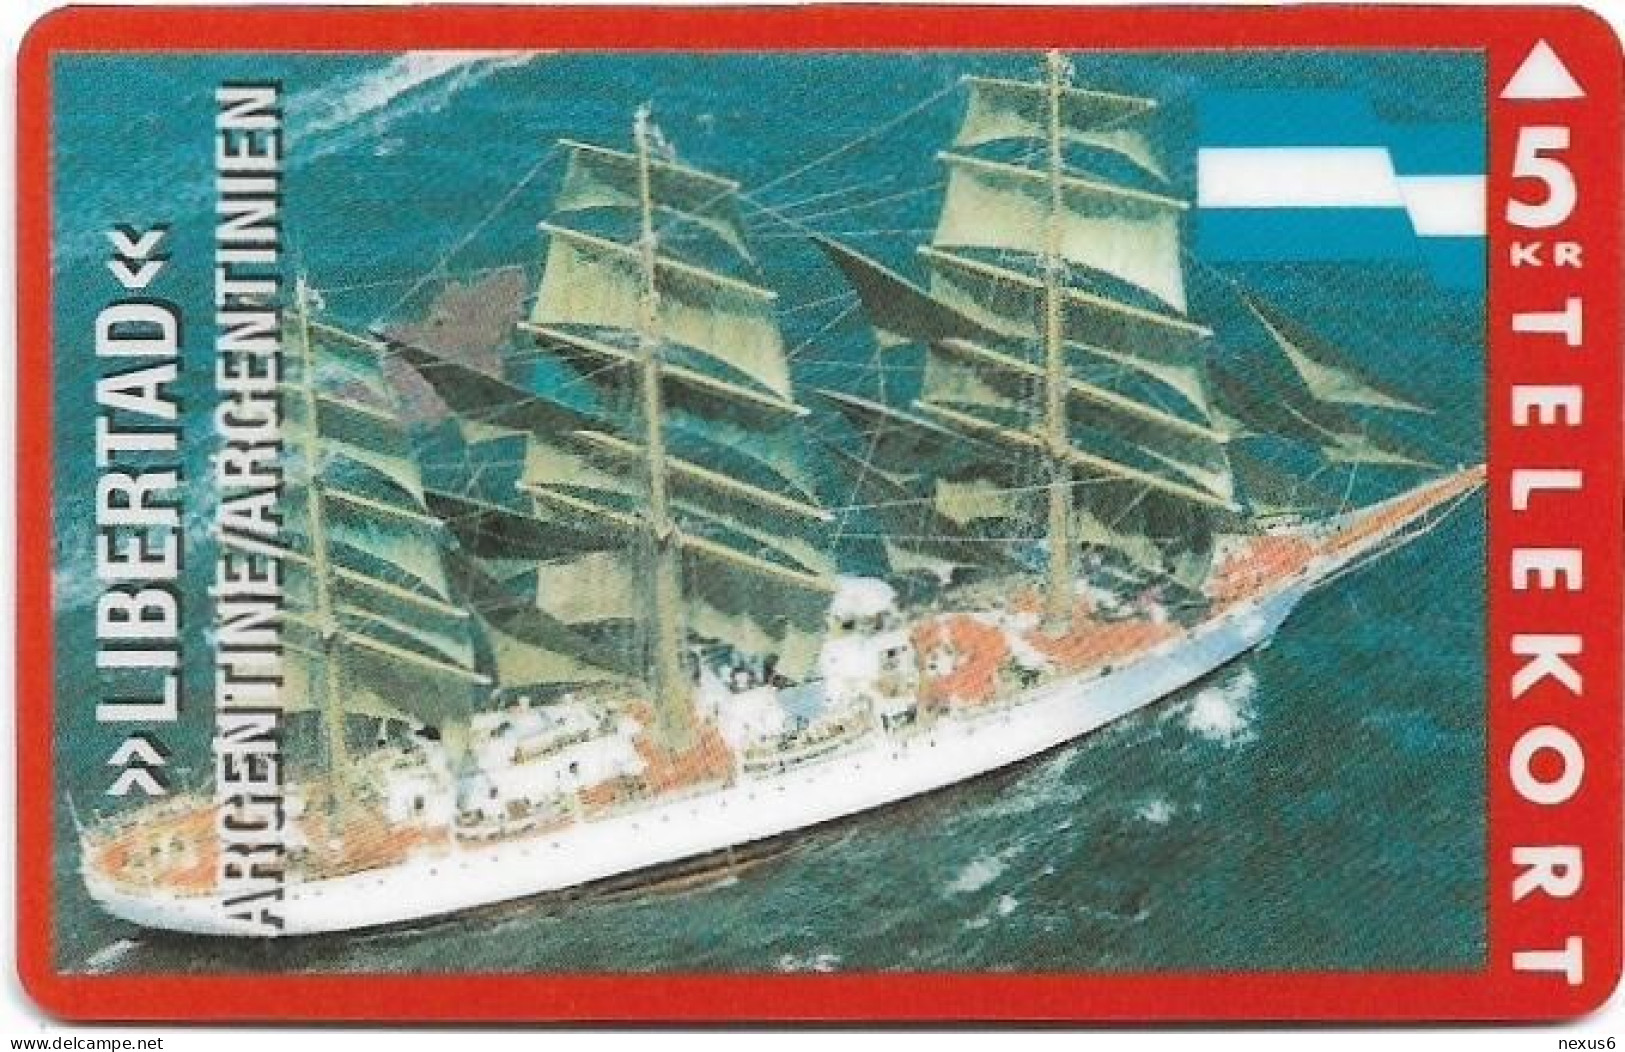 Denmark - KTAS - Ships (Red) - Argentine - Libertad - TDKP058 - 01.1994, 5kr, 2.500ex, Used - Denmark